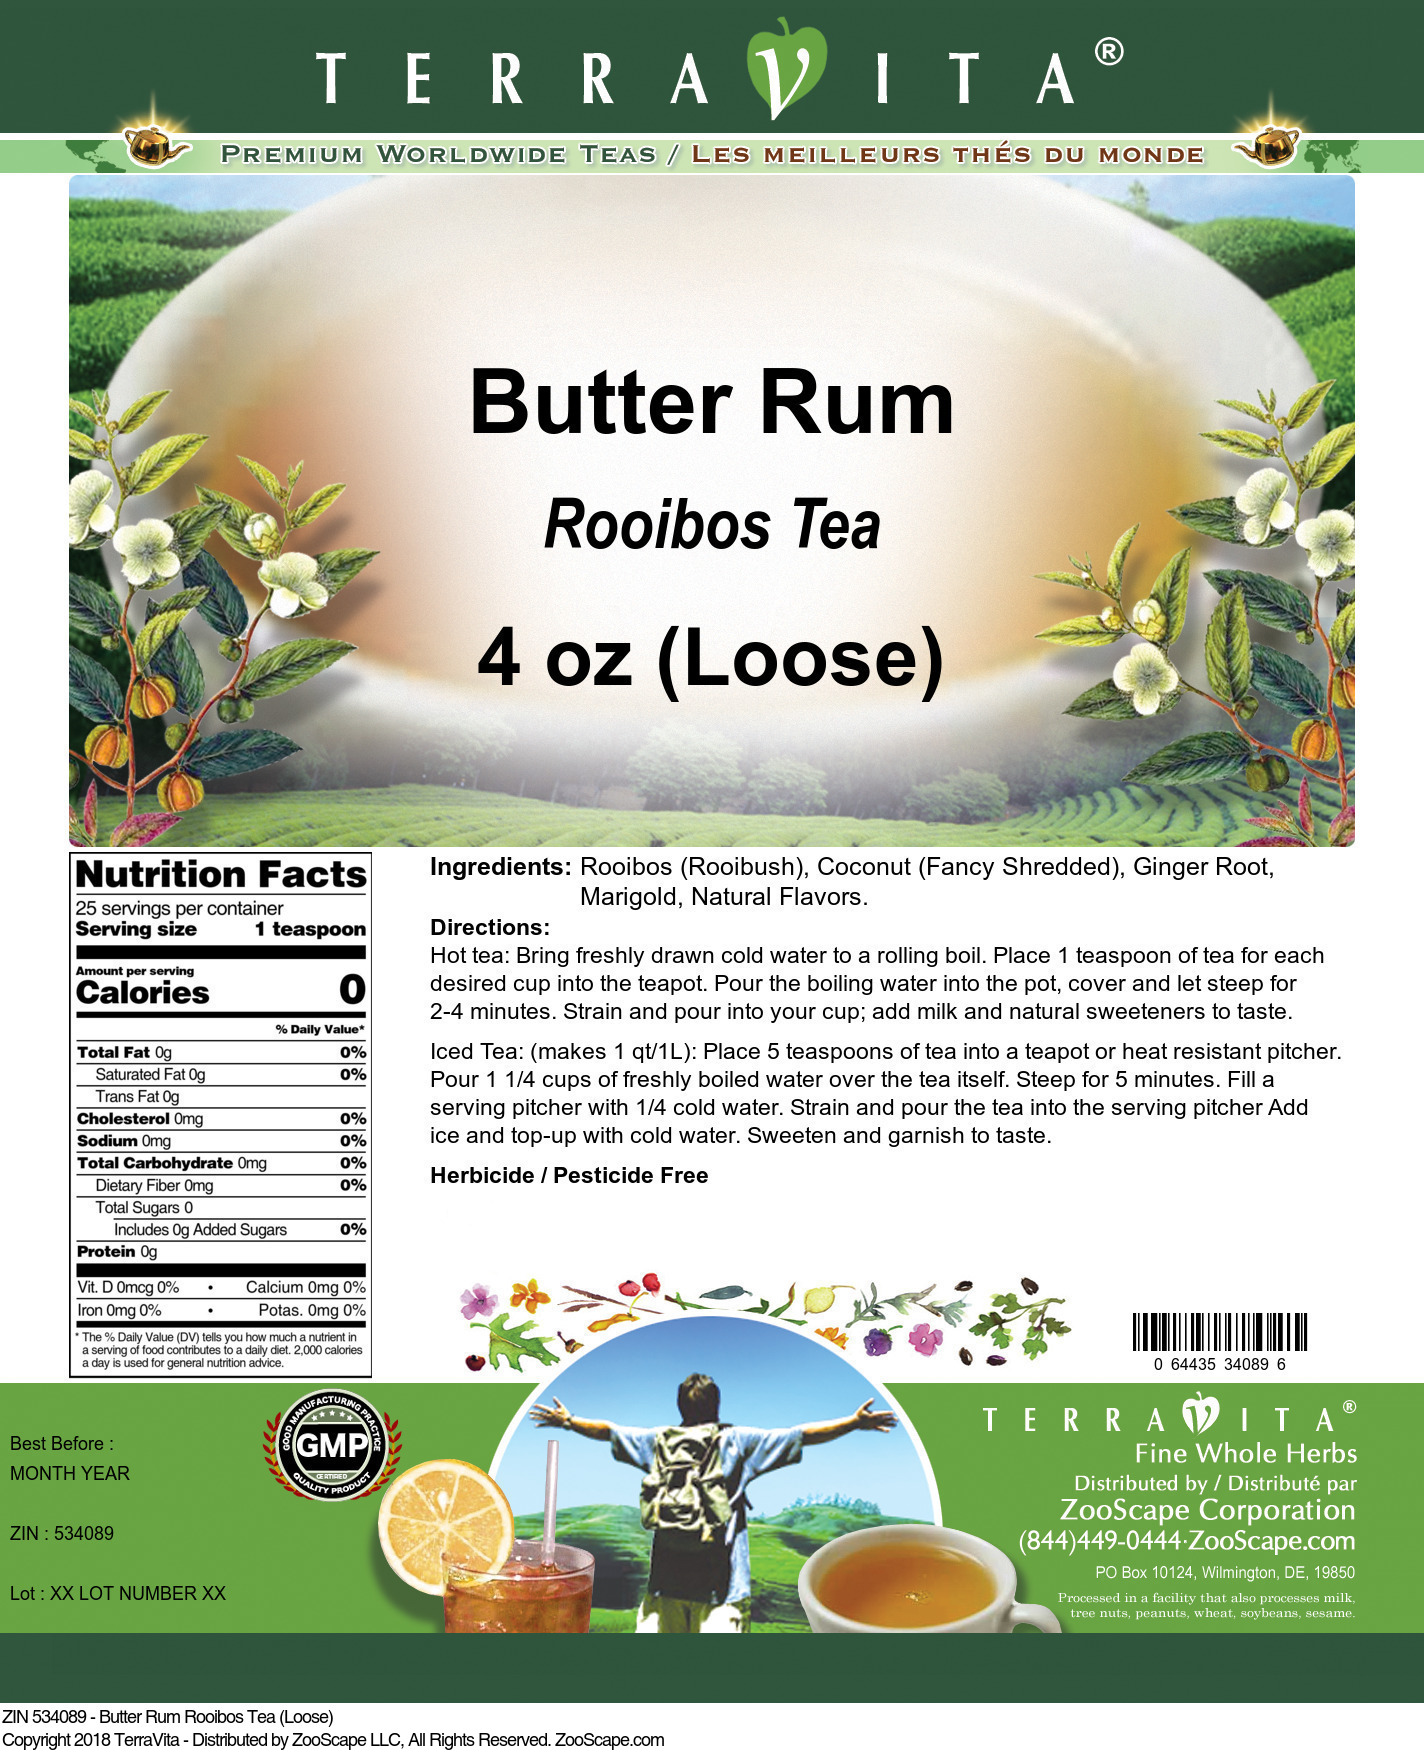 Butter Rum Rooibos Tea (Loose) - Label